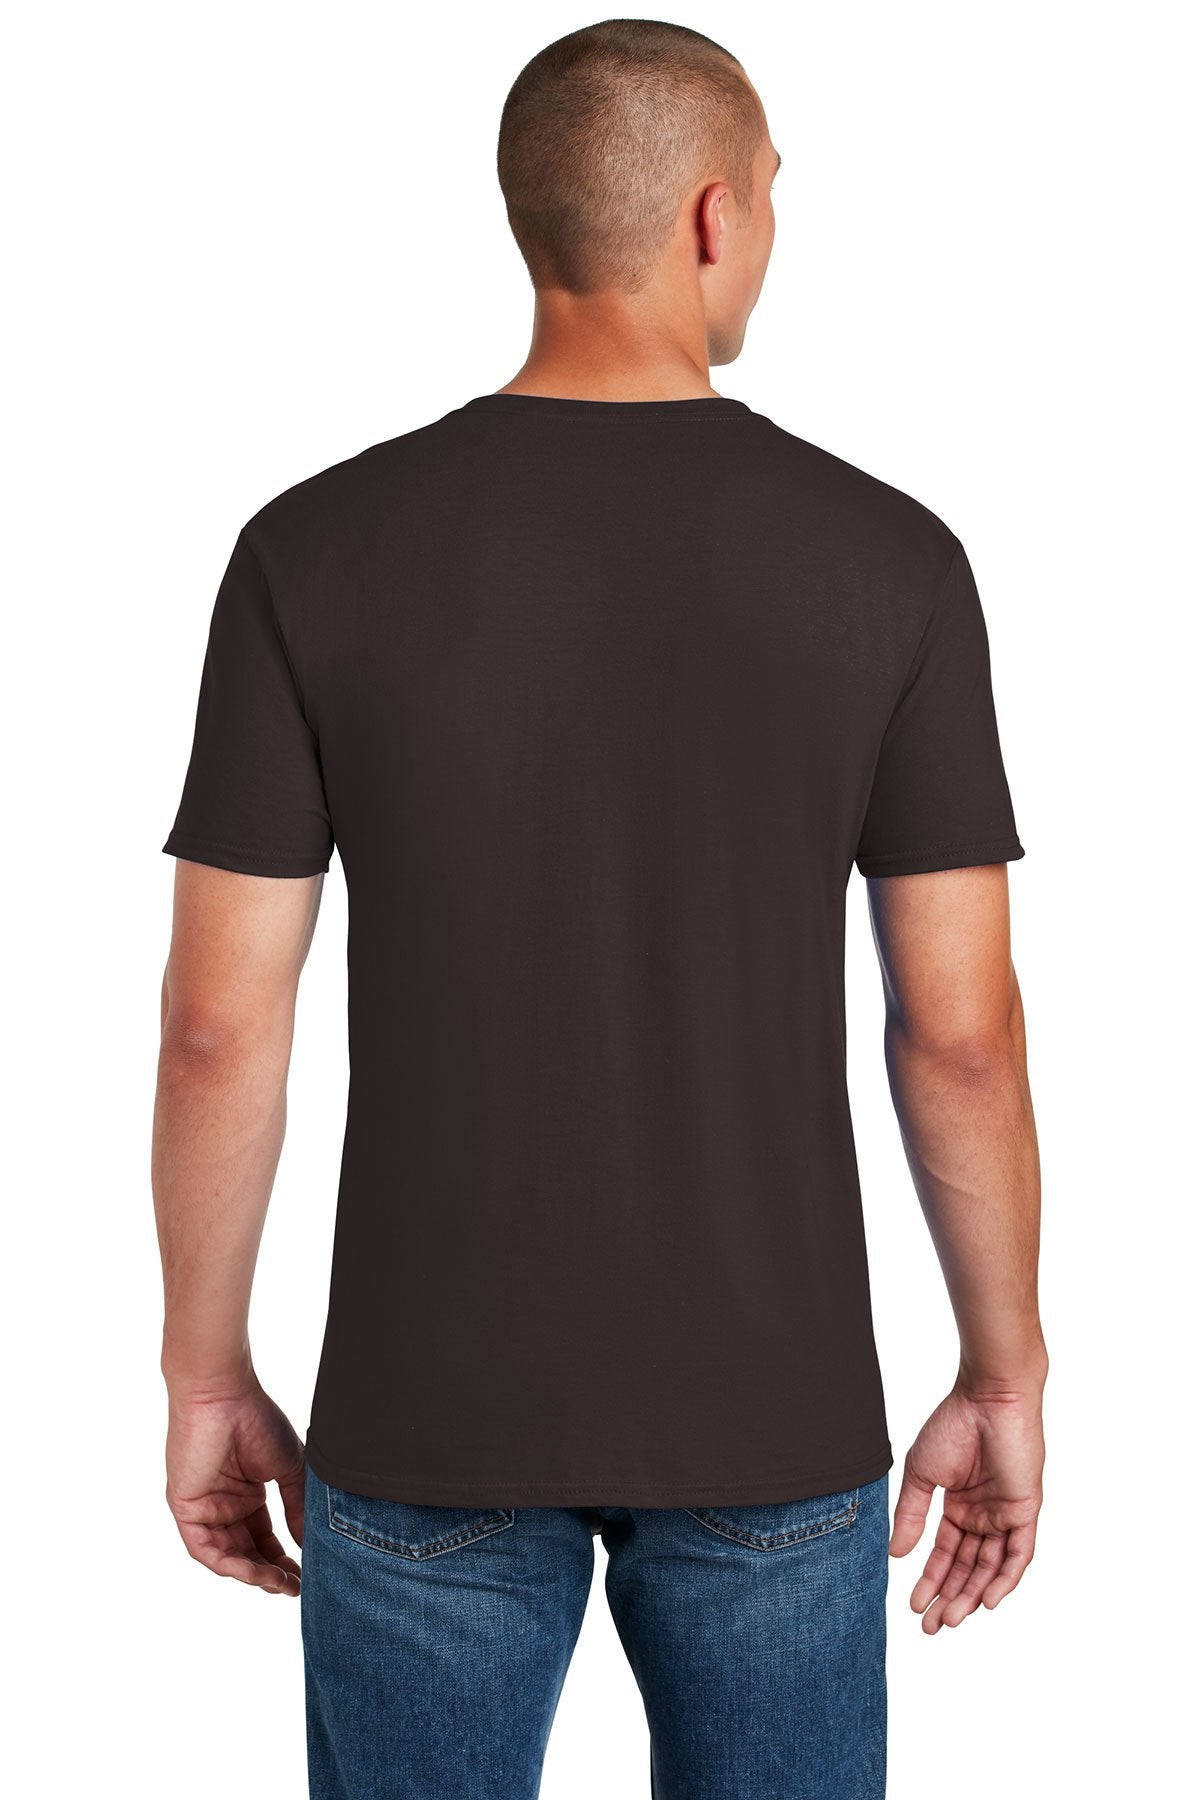 Gildan Softstyle T Shirt in Dark Chocolate, add a custom design